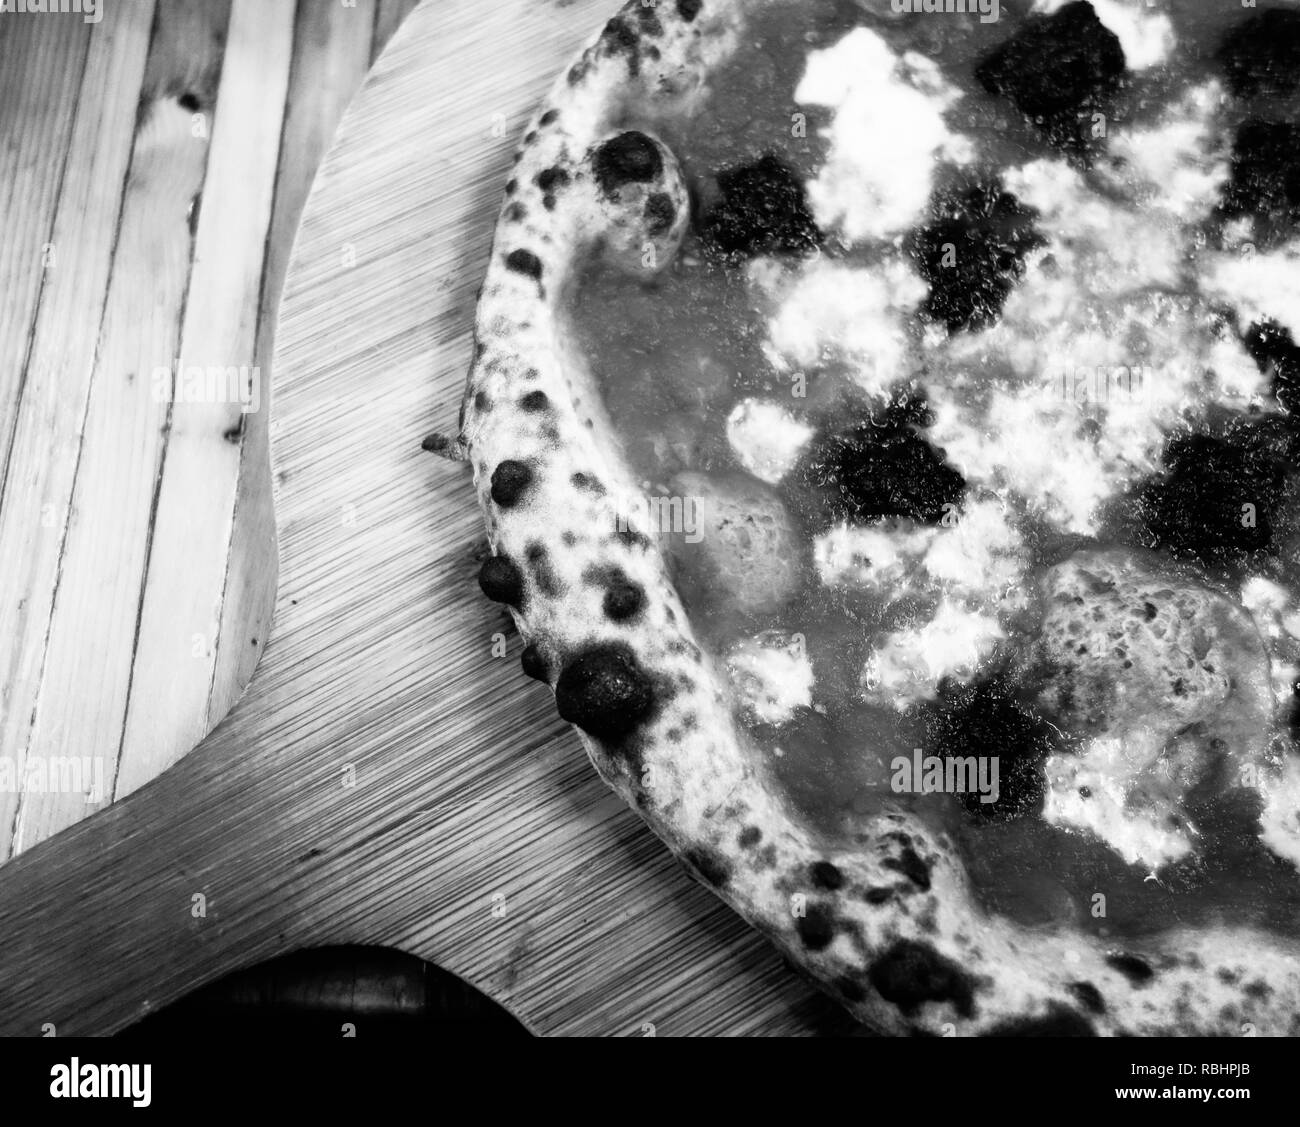 Delicious Pizza photograph Stock Photo